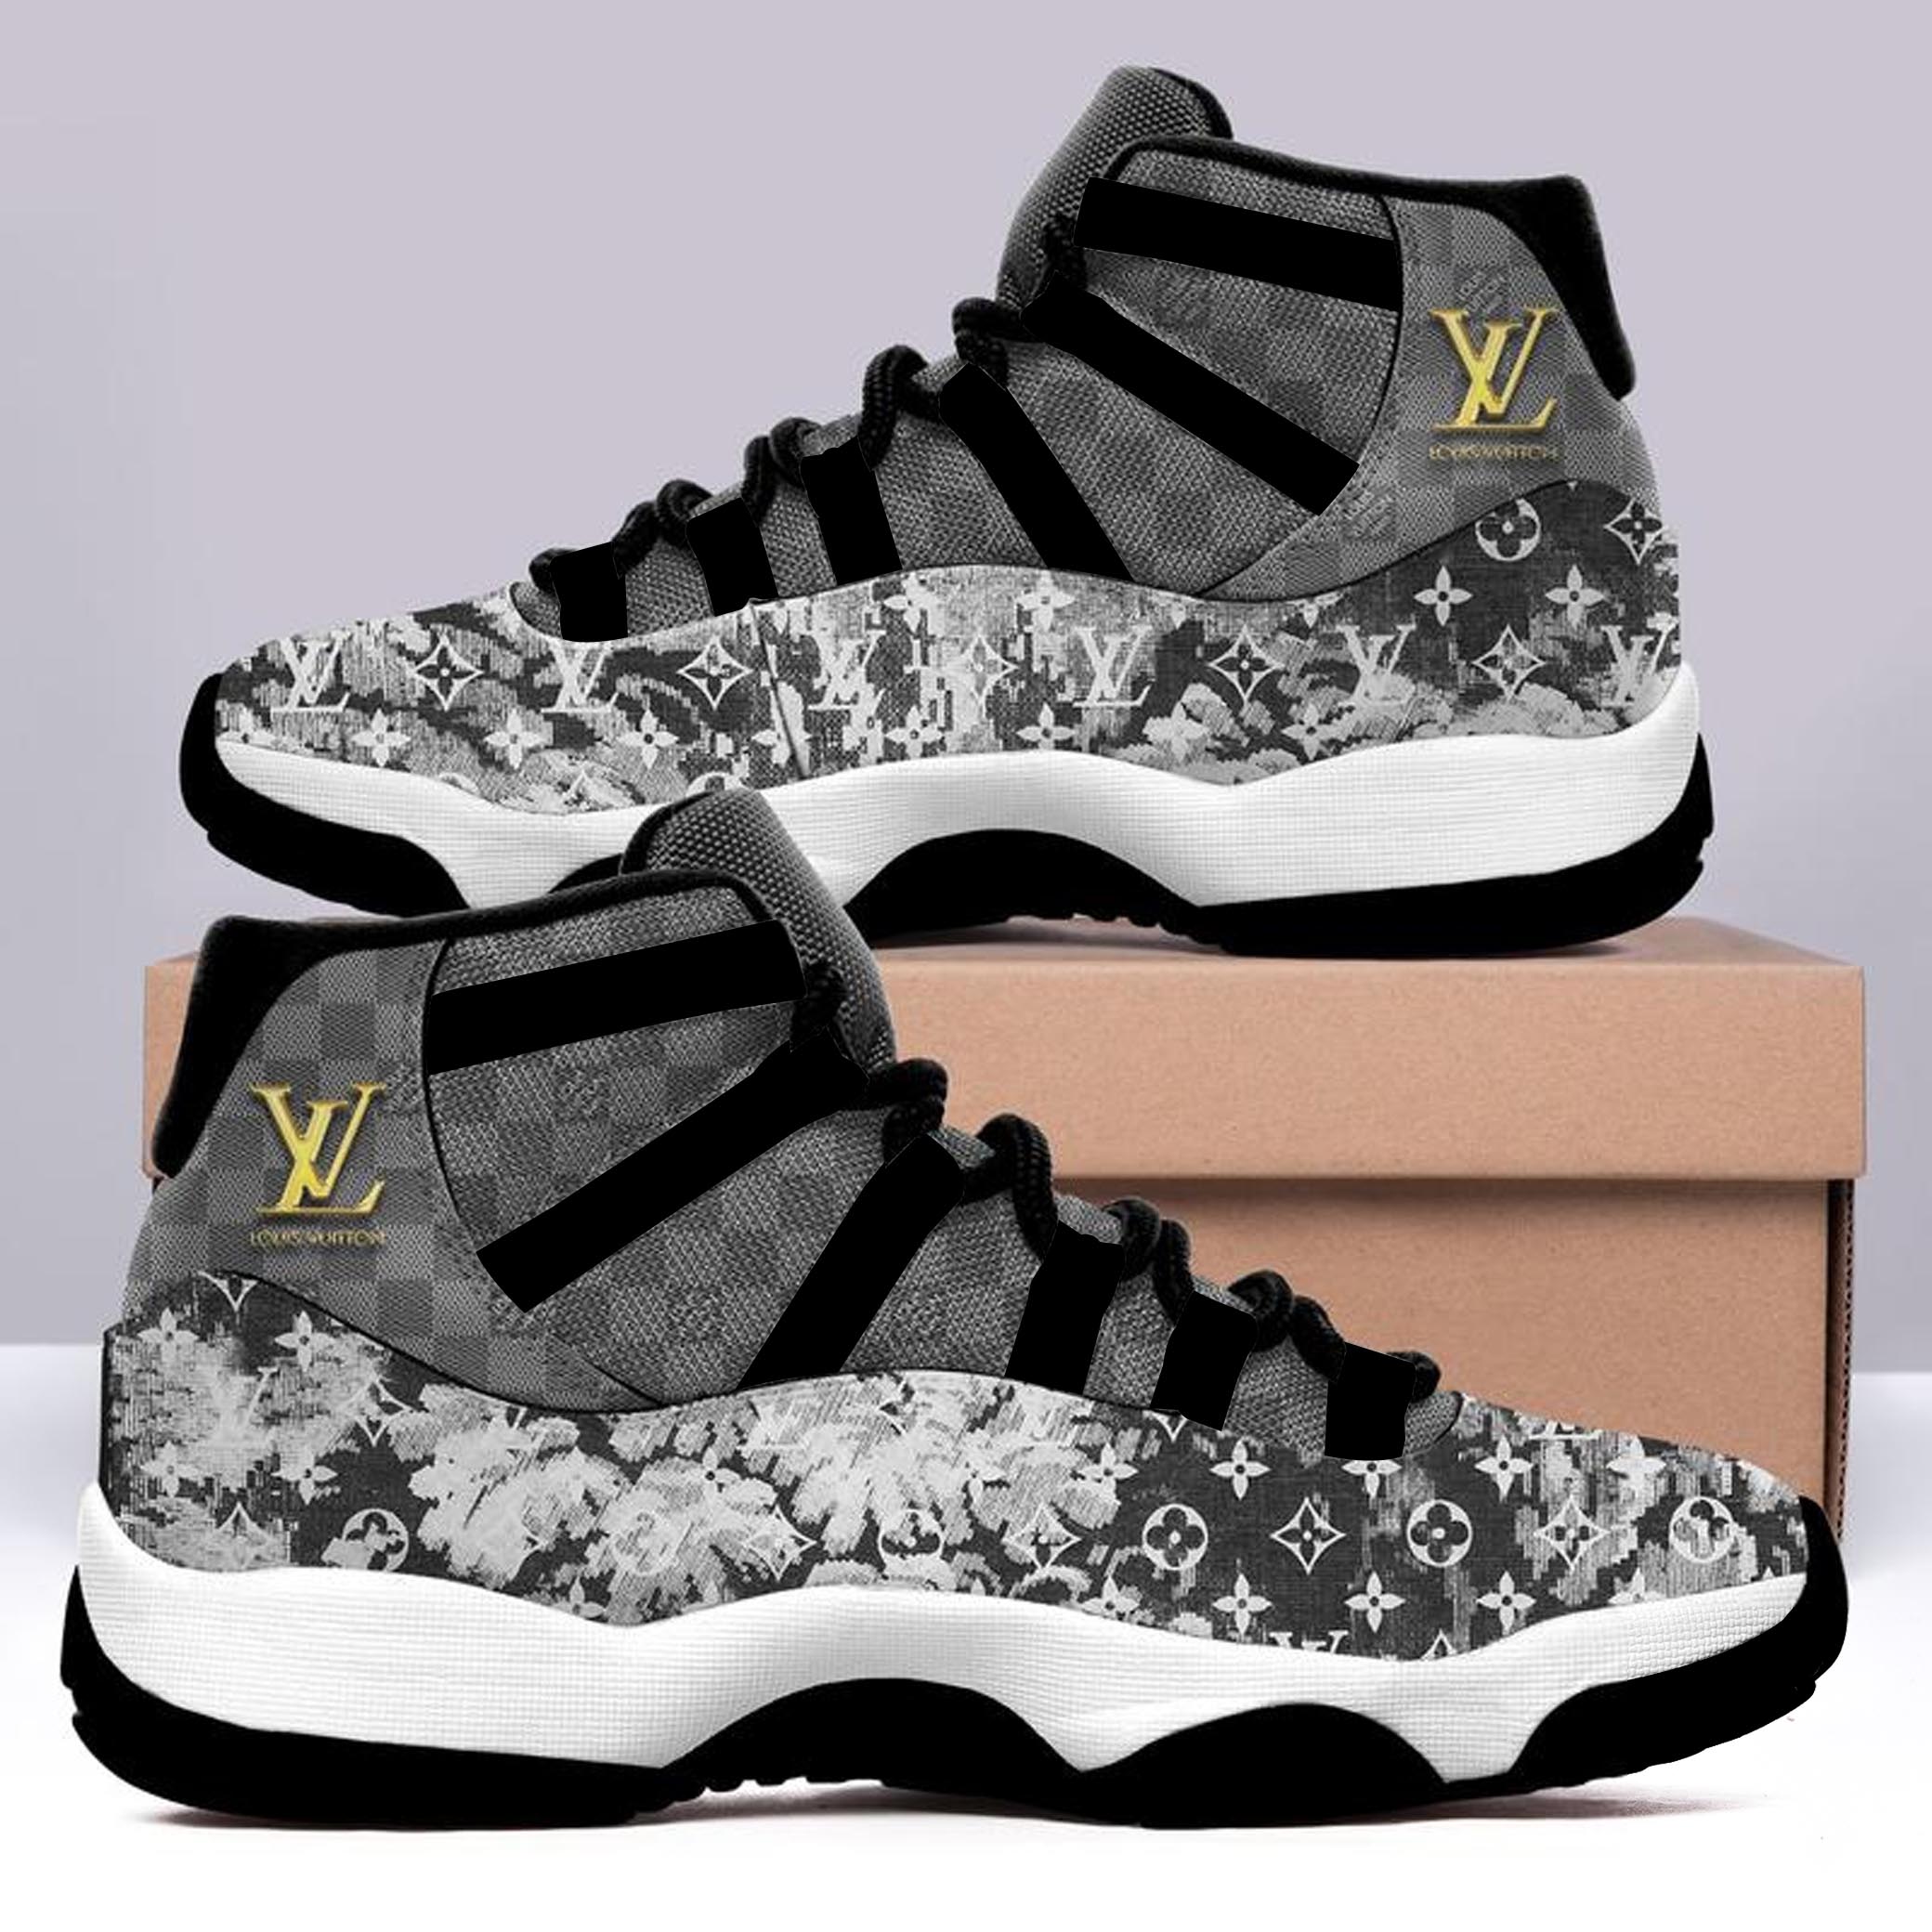 Grey Louis Vuitton Air Jordan 11 Sneakers Shoes Hot 2022 LV Gifts For Men Women HT